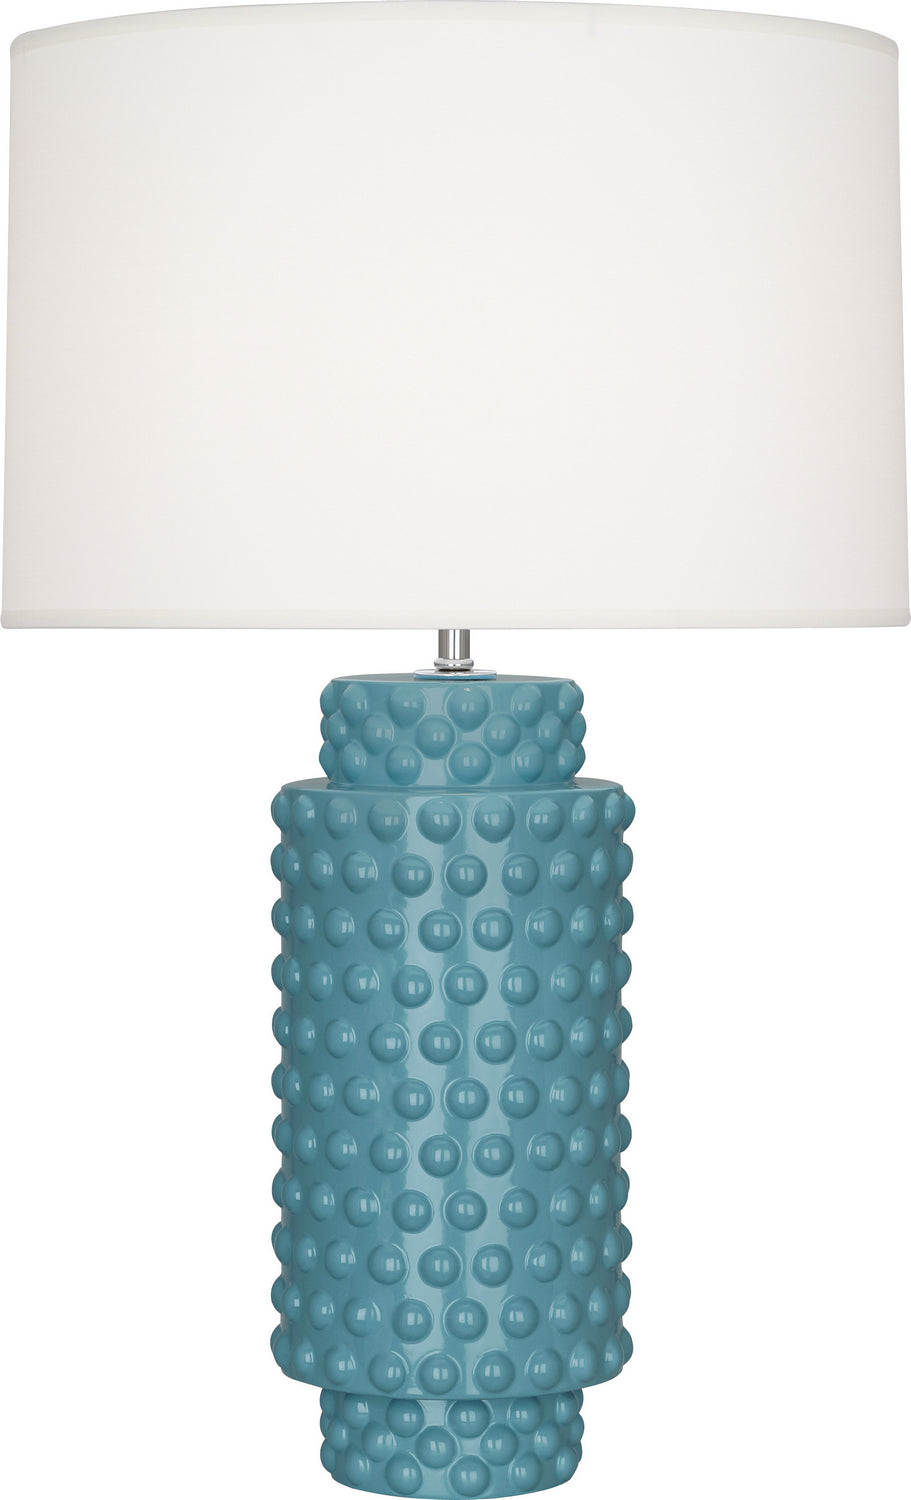 Robert Abbey - One Light Table Lamp - Dolly - Steel Blue Glazed Textured Ceramic- Union Lighting Luminaires Decor